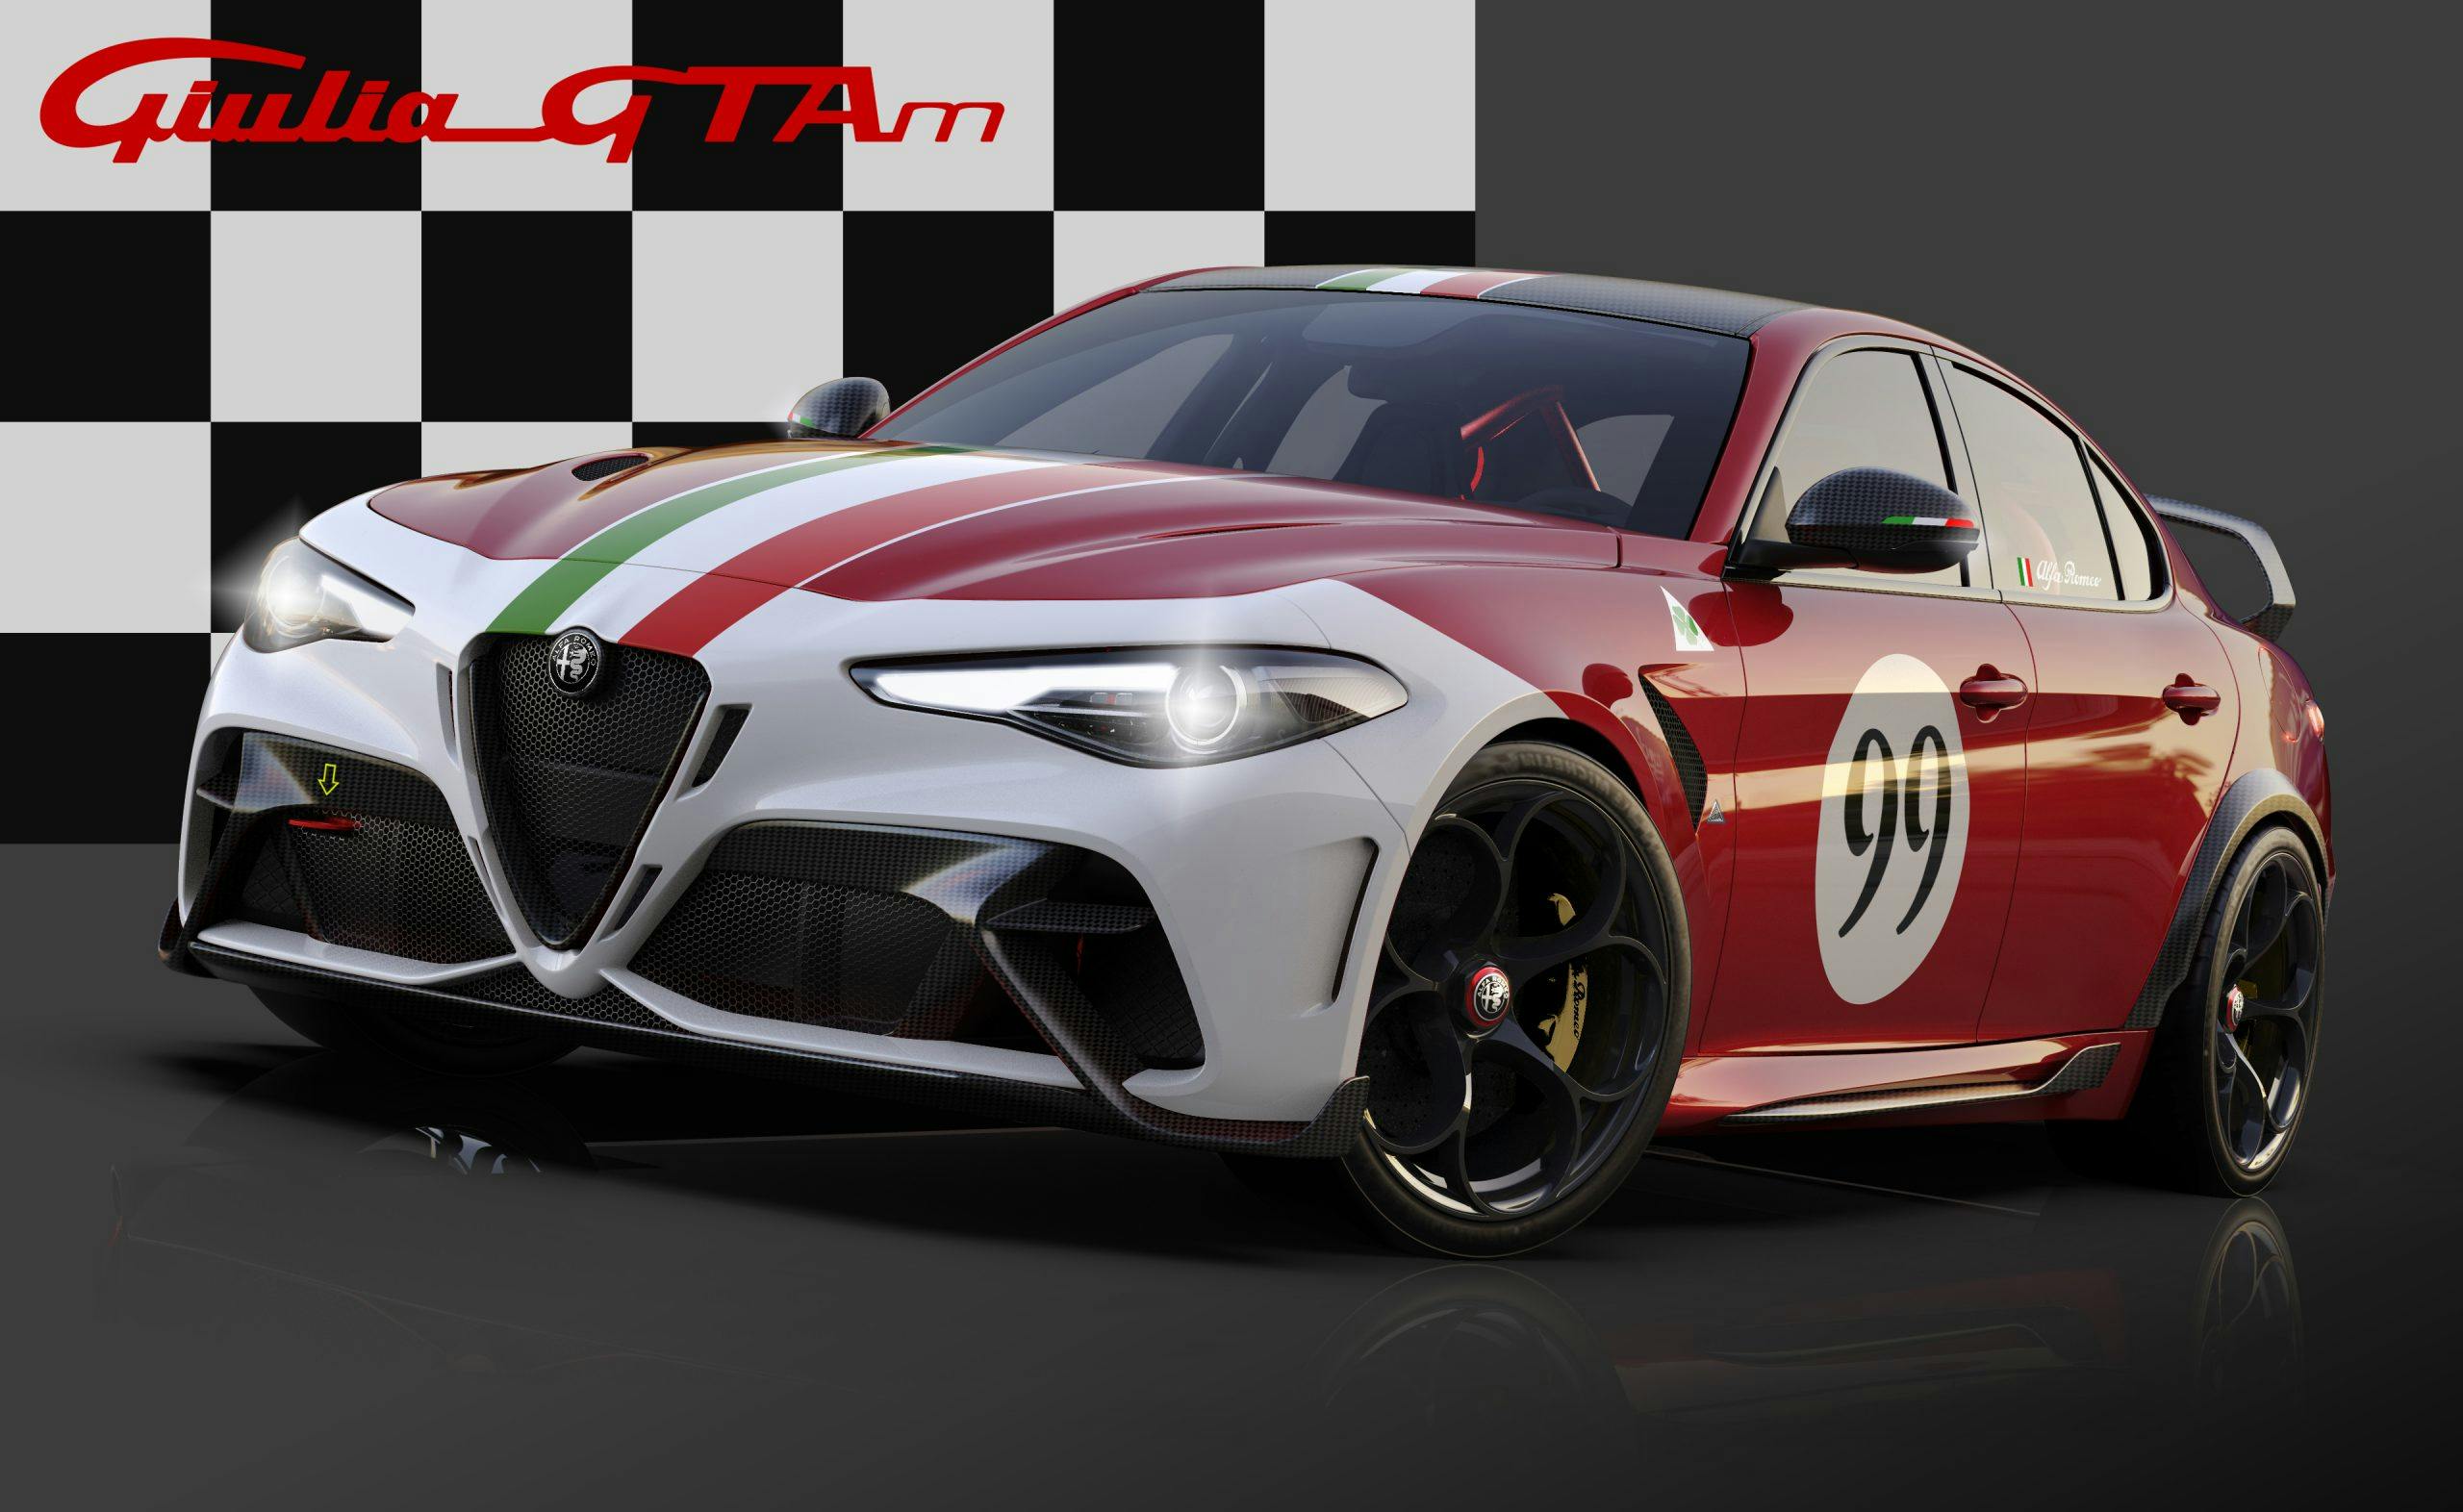 Alfa Romeo Giulia GTA dedicated Livery